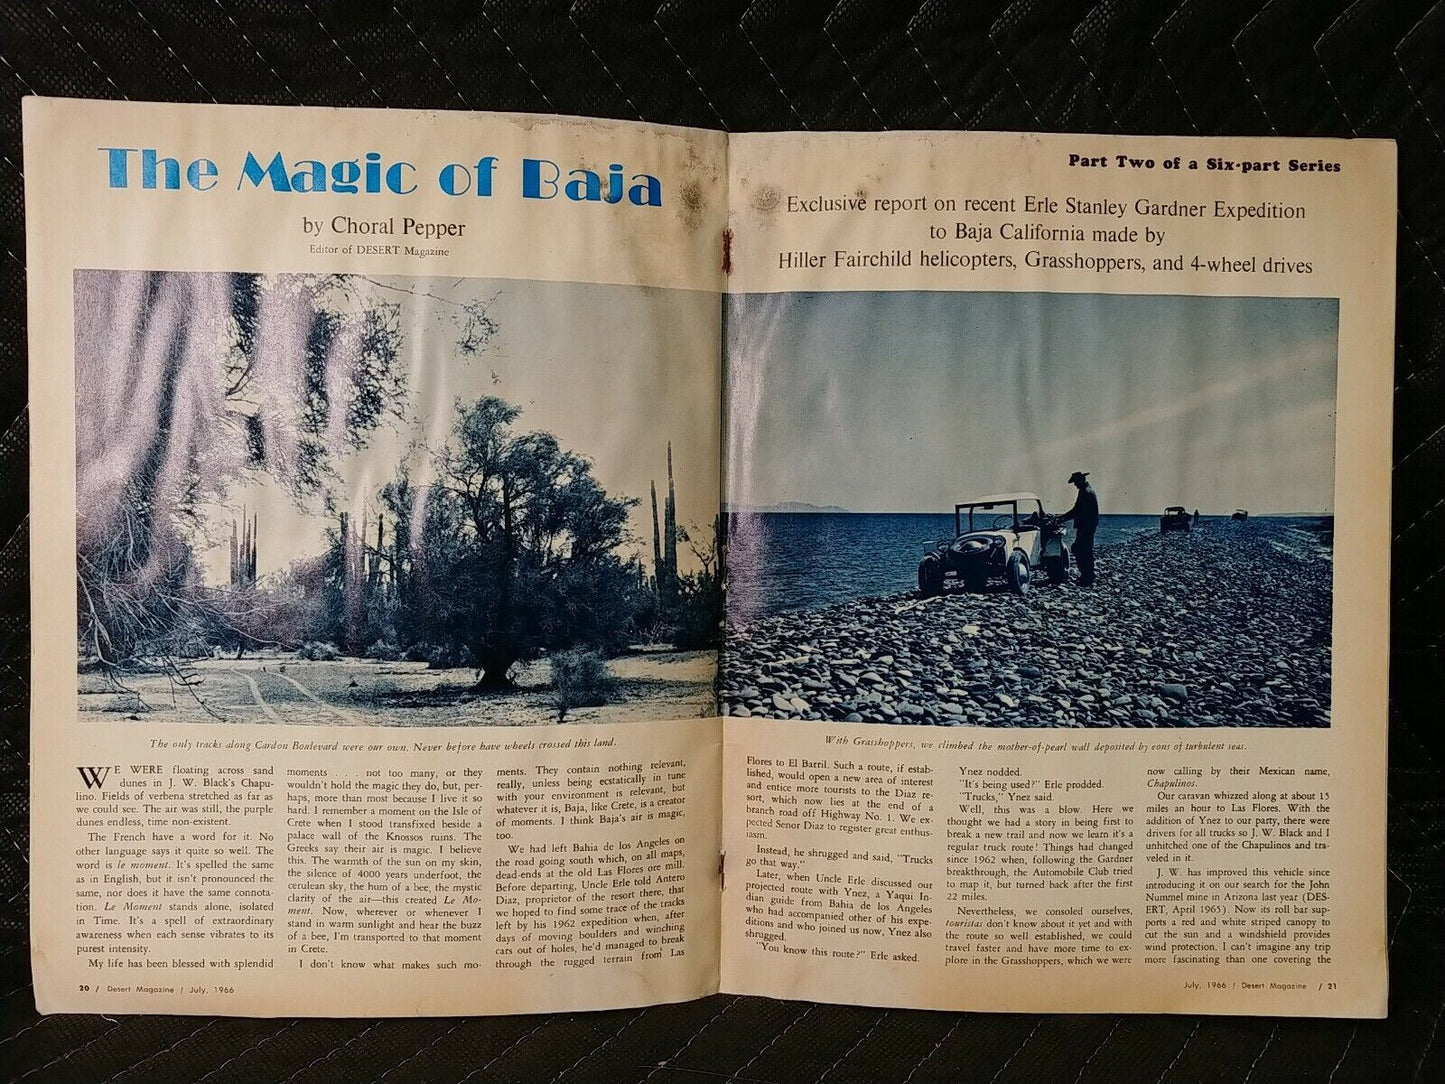 Vintage Desert Magazine July 1966